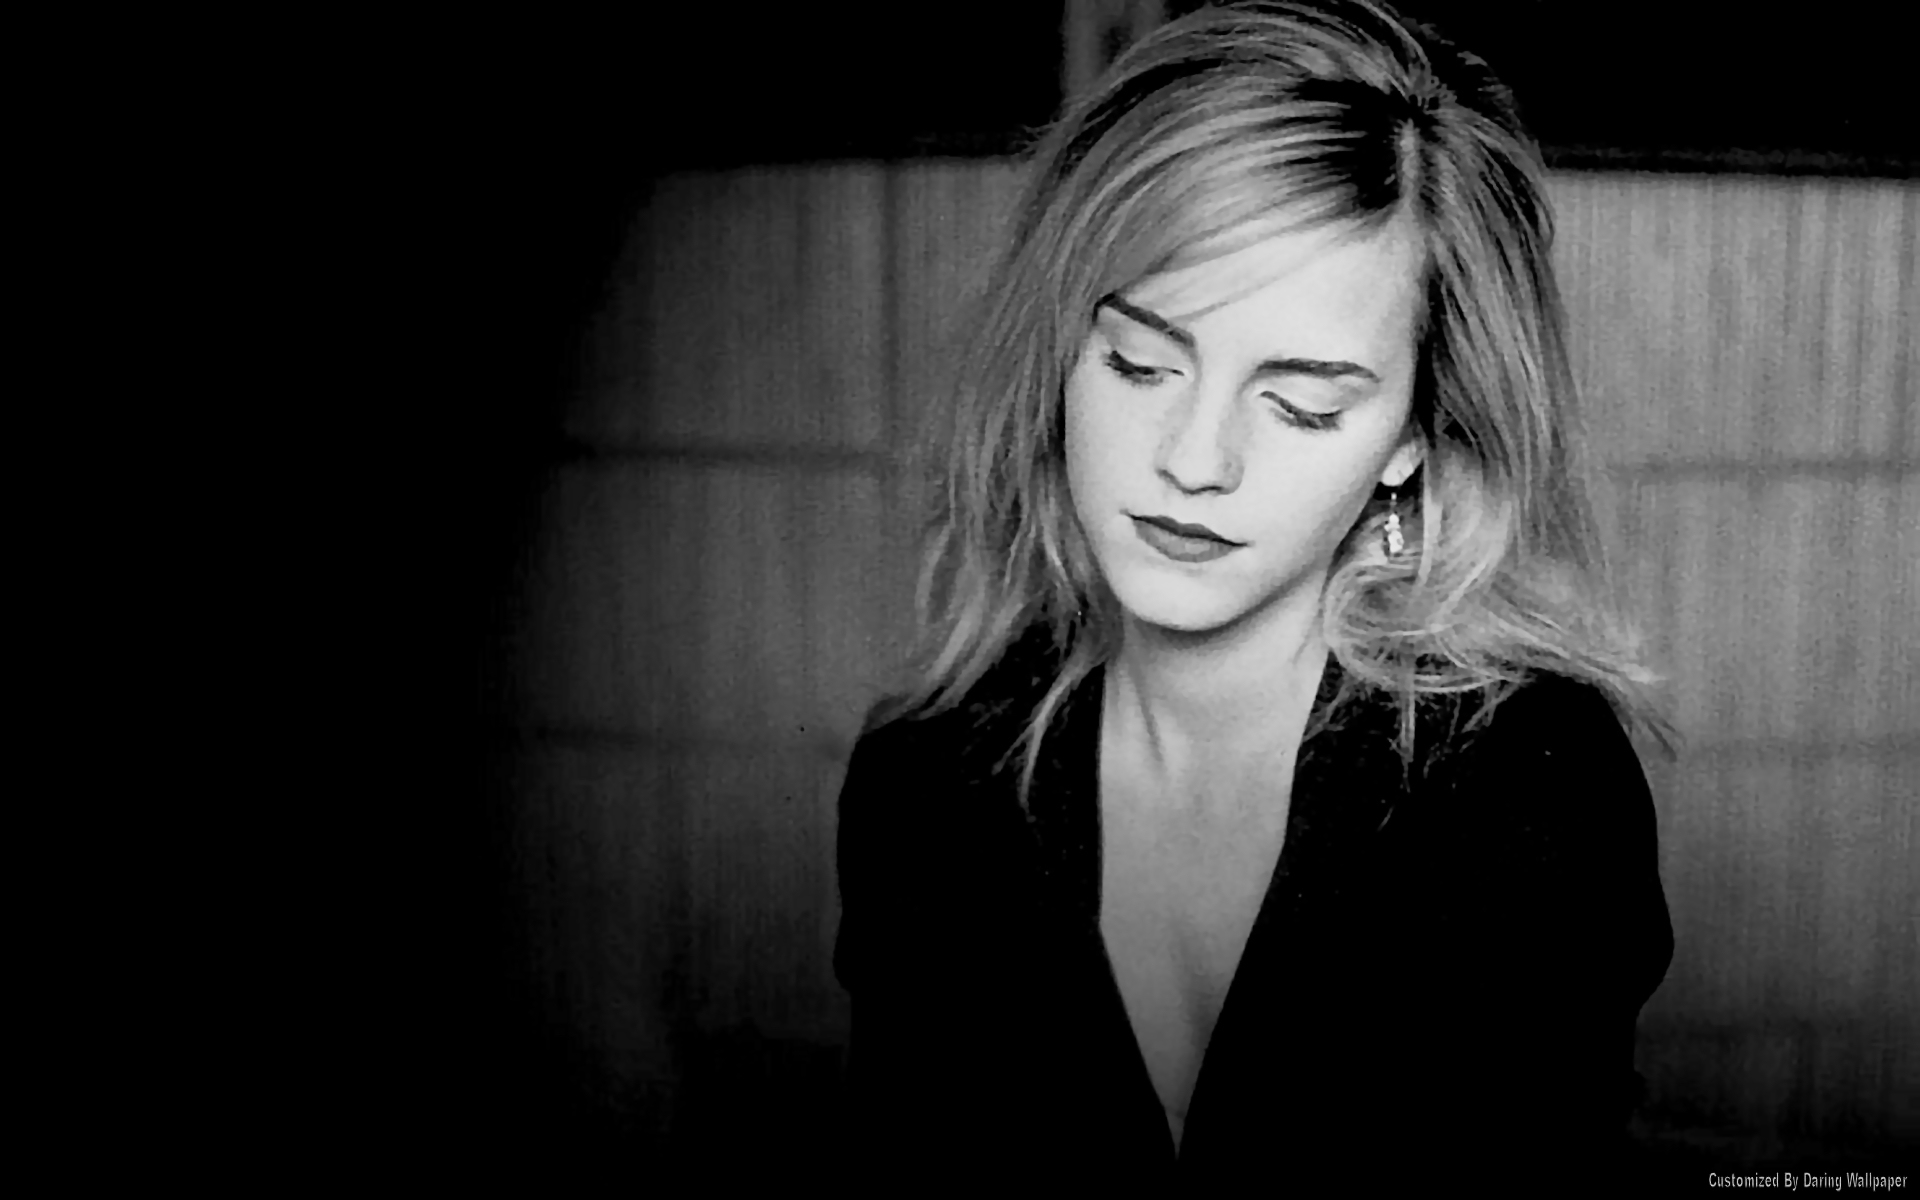 Fondo de pantalla de Emma Watson - Fondo de pantalla de Emma Watson (20011787